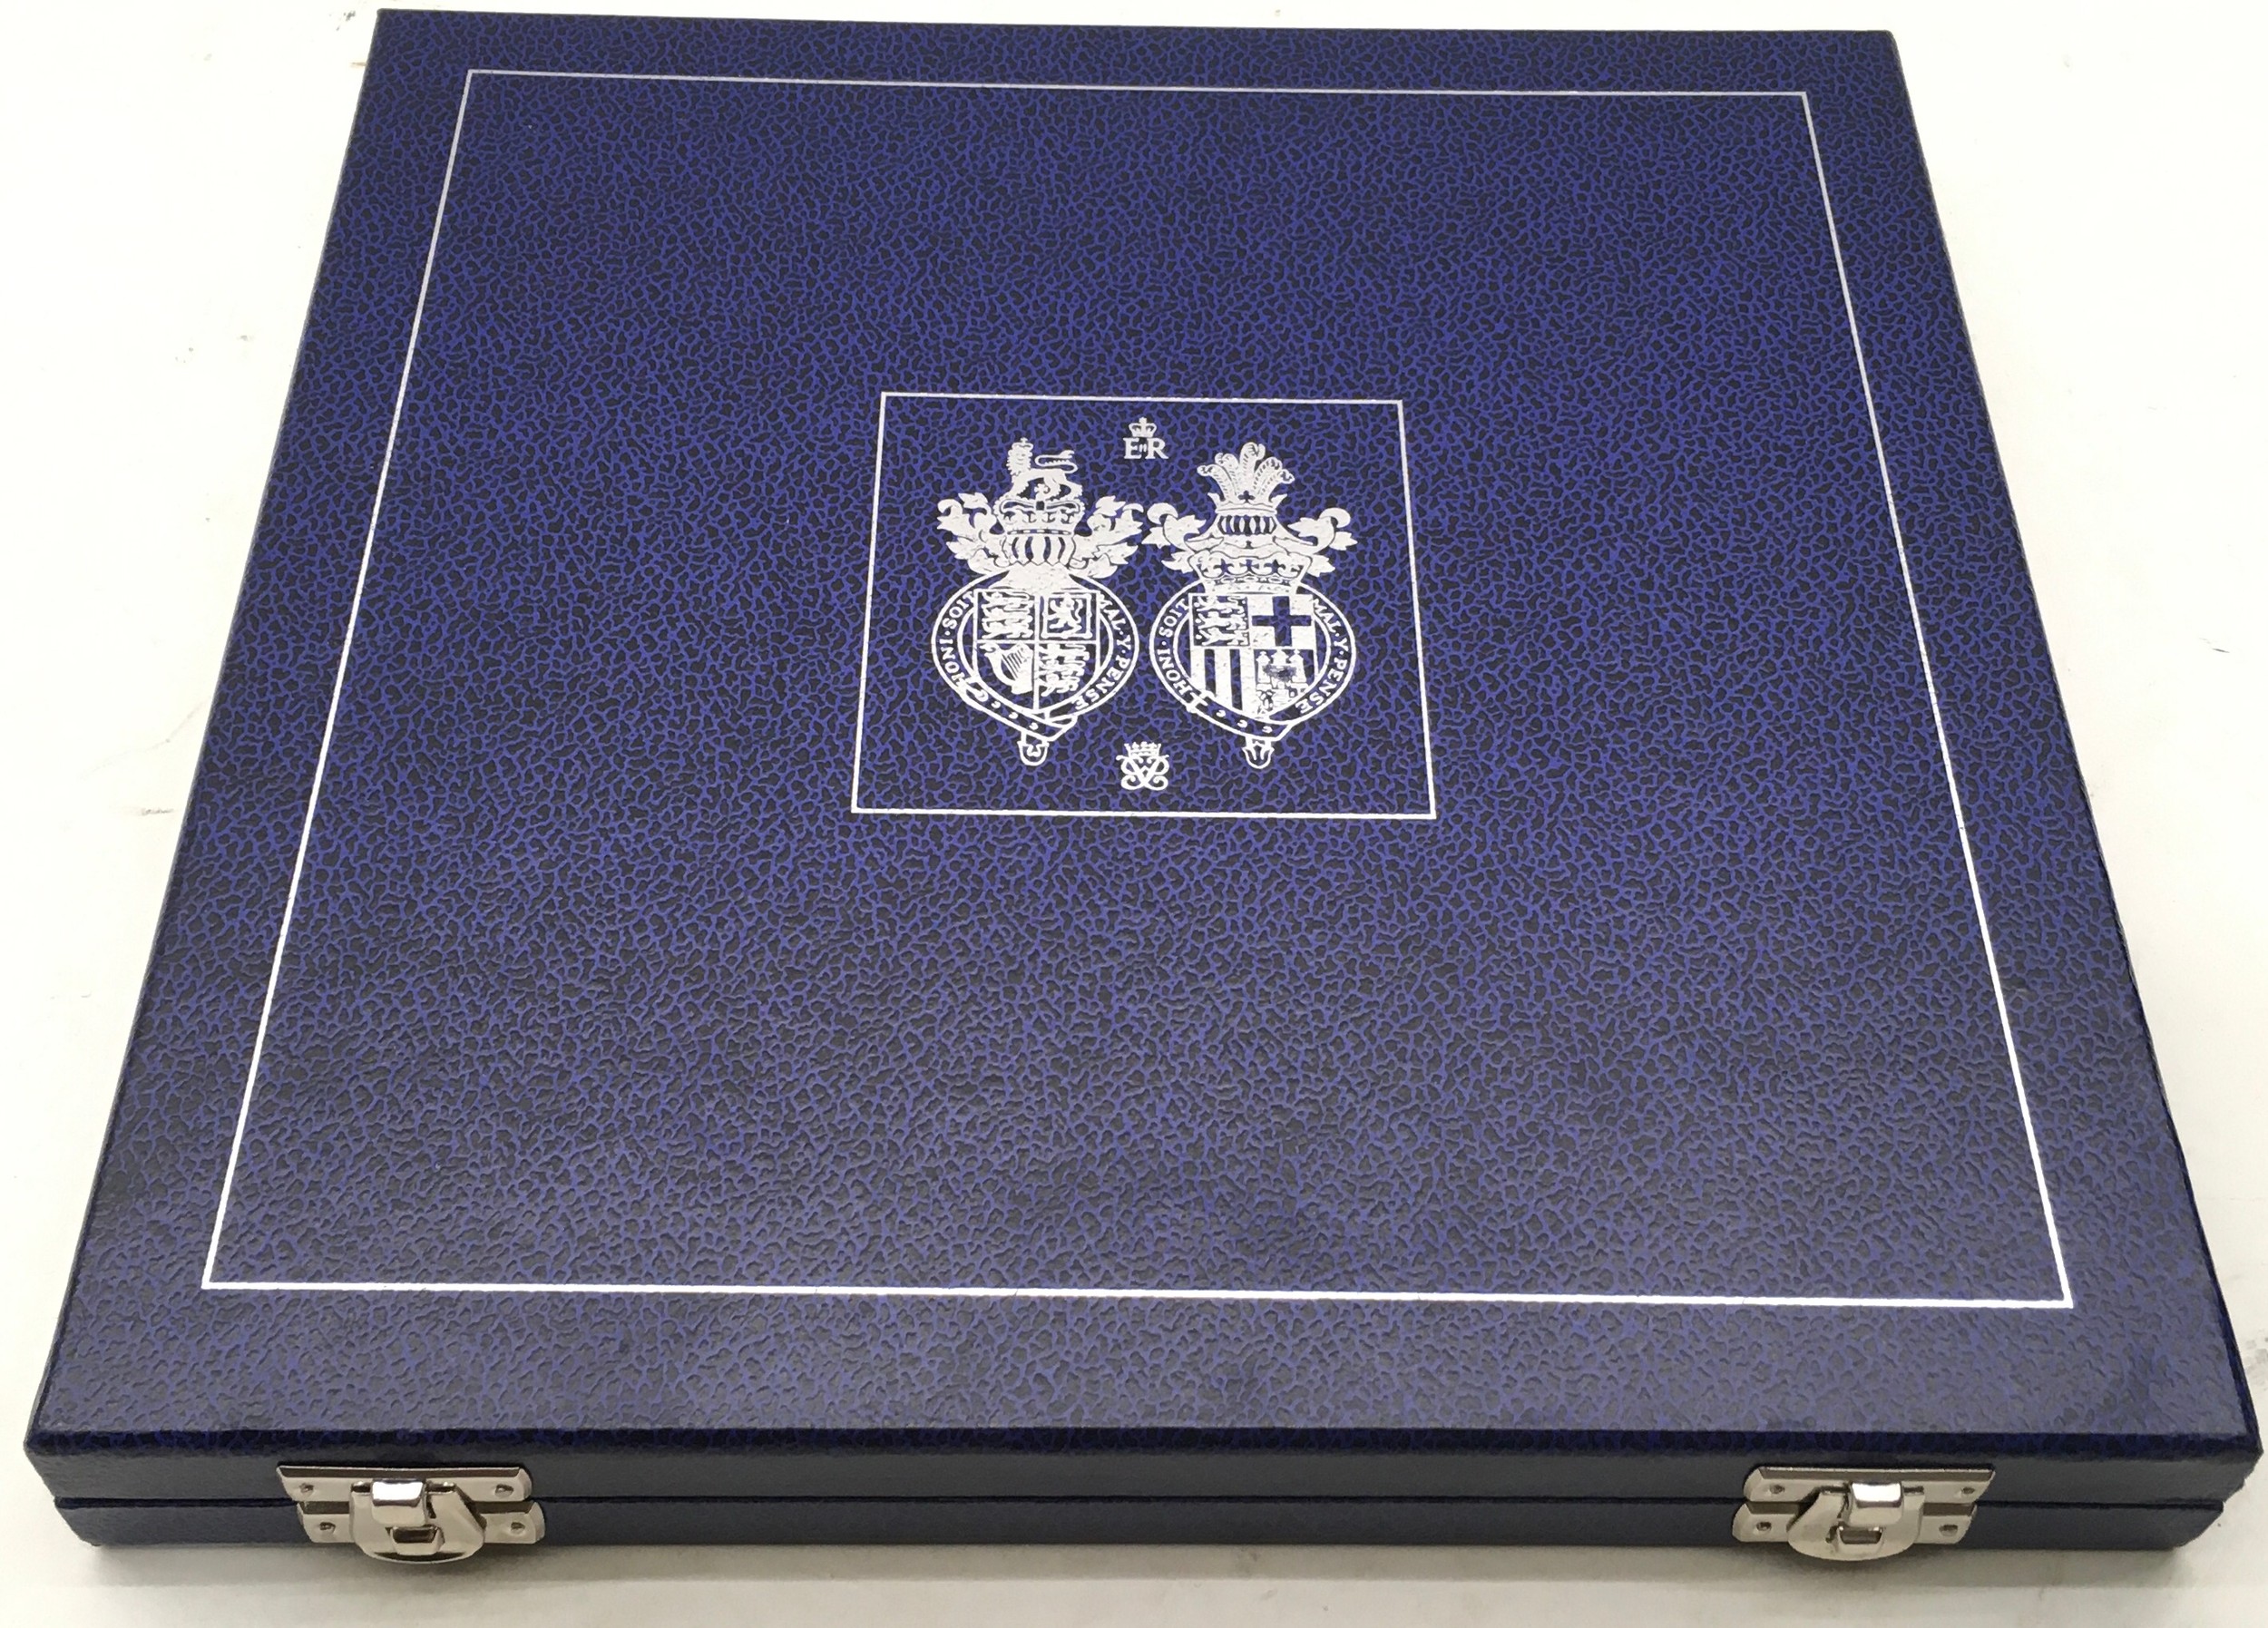 Silver Ltd edition commemorative plate to celebrate Queen Elizabeth II silver wedding anniversary in - Image 7 of 7